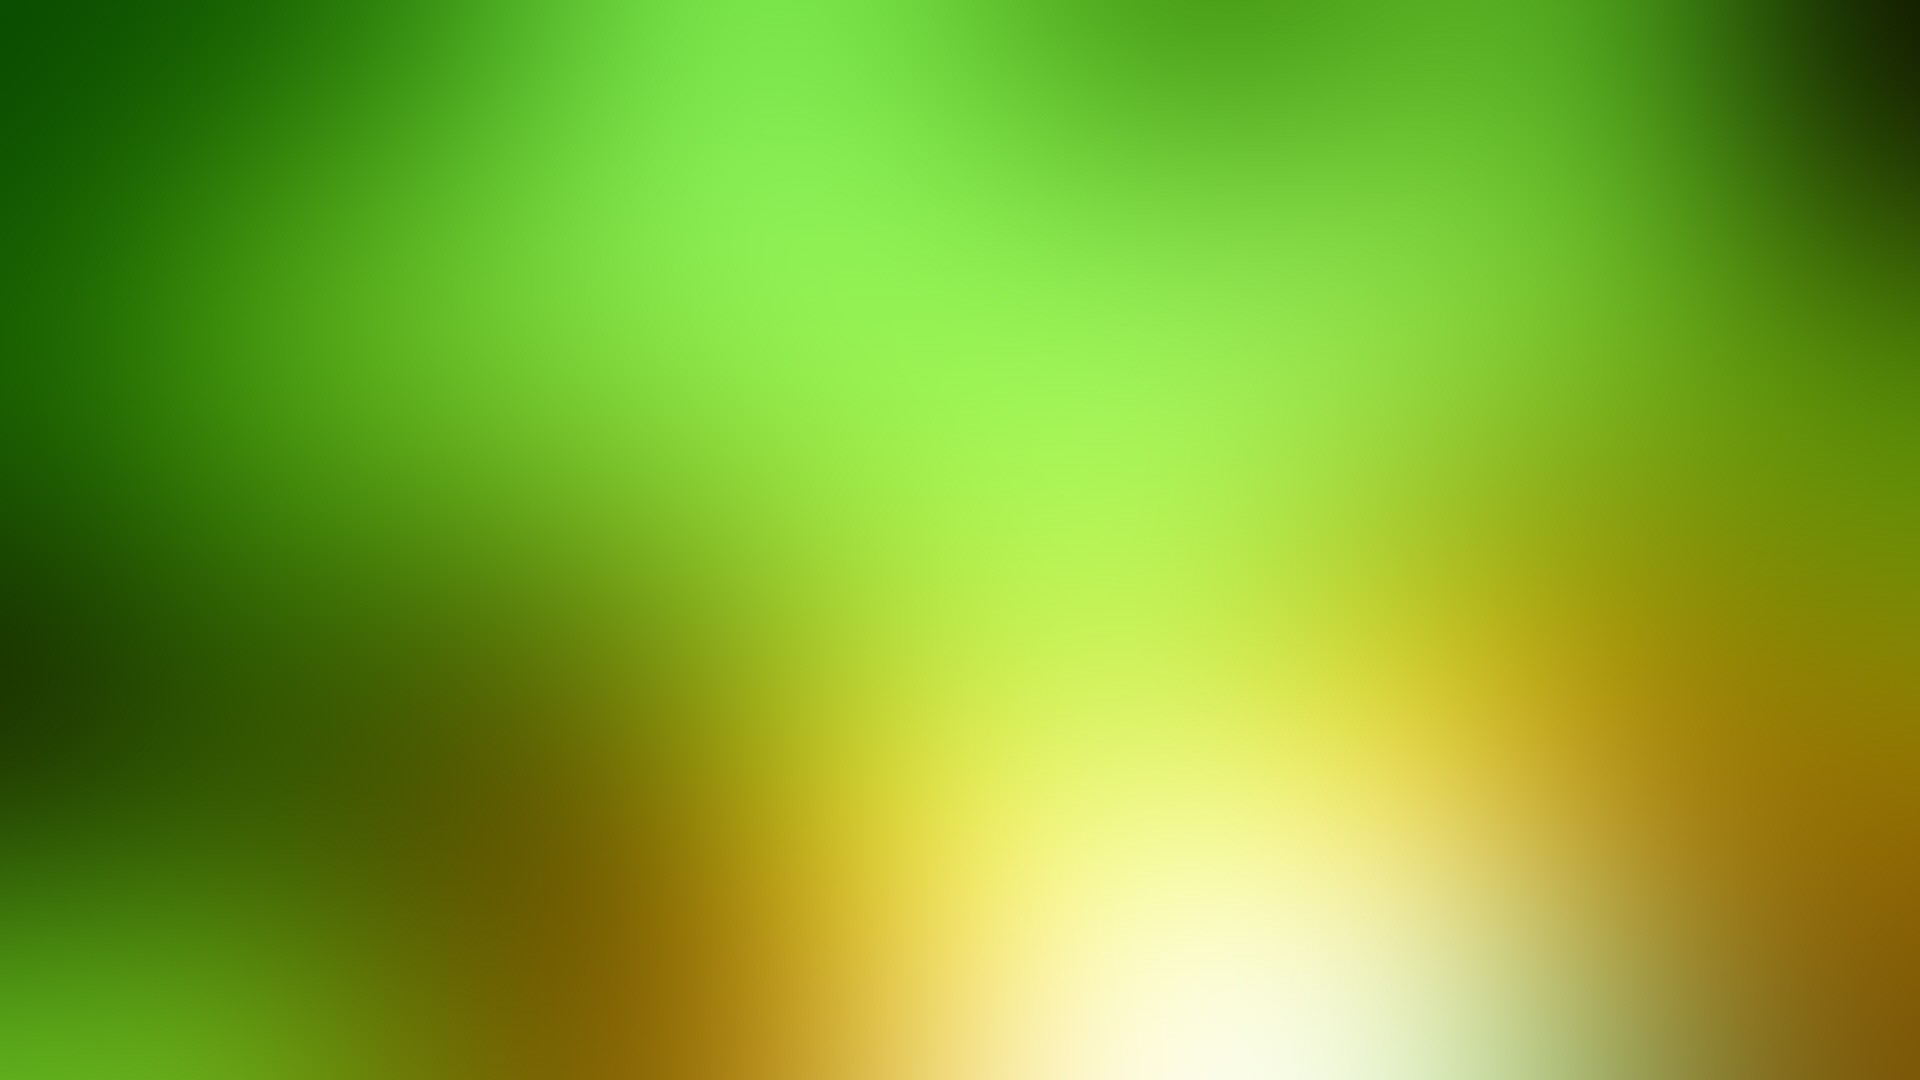 1920x1080 ... Background Full HD 1080p.  Wallpaper green, yellow, white, spot